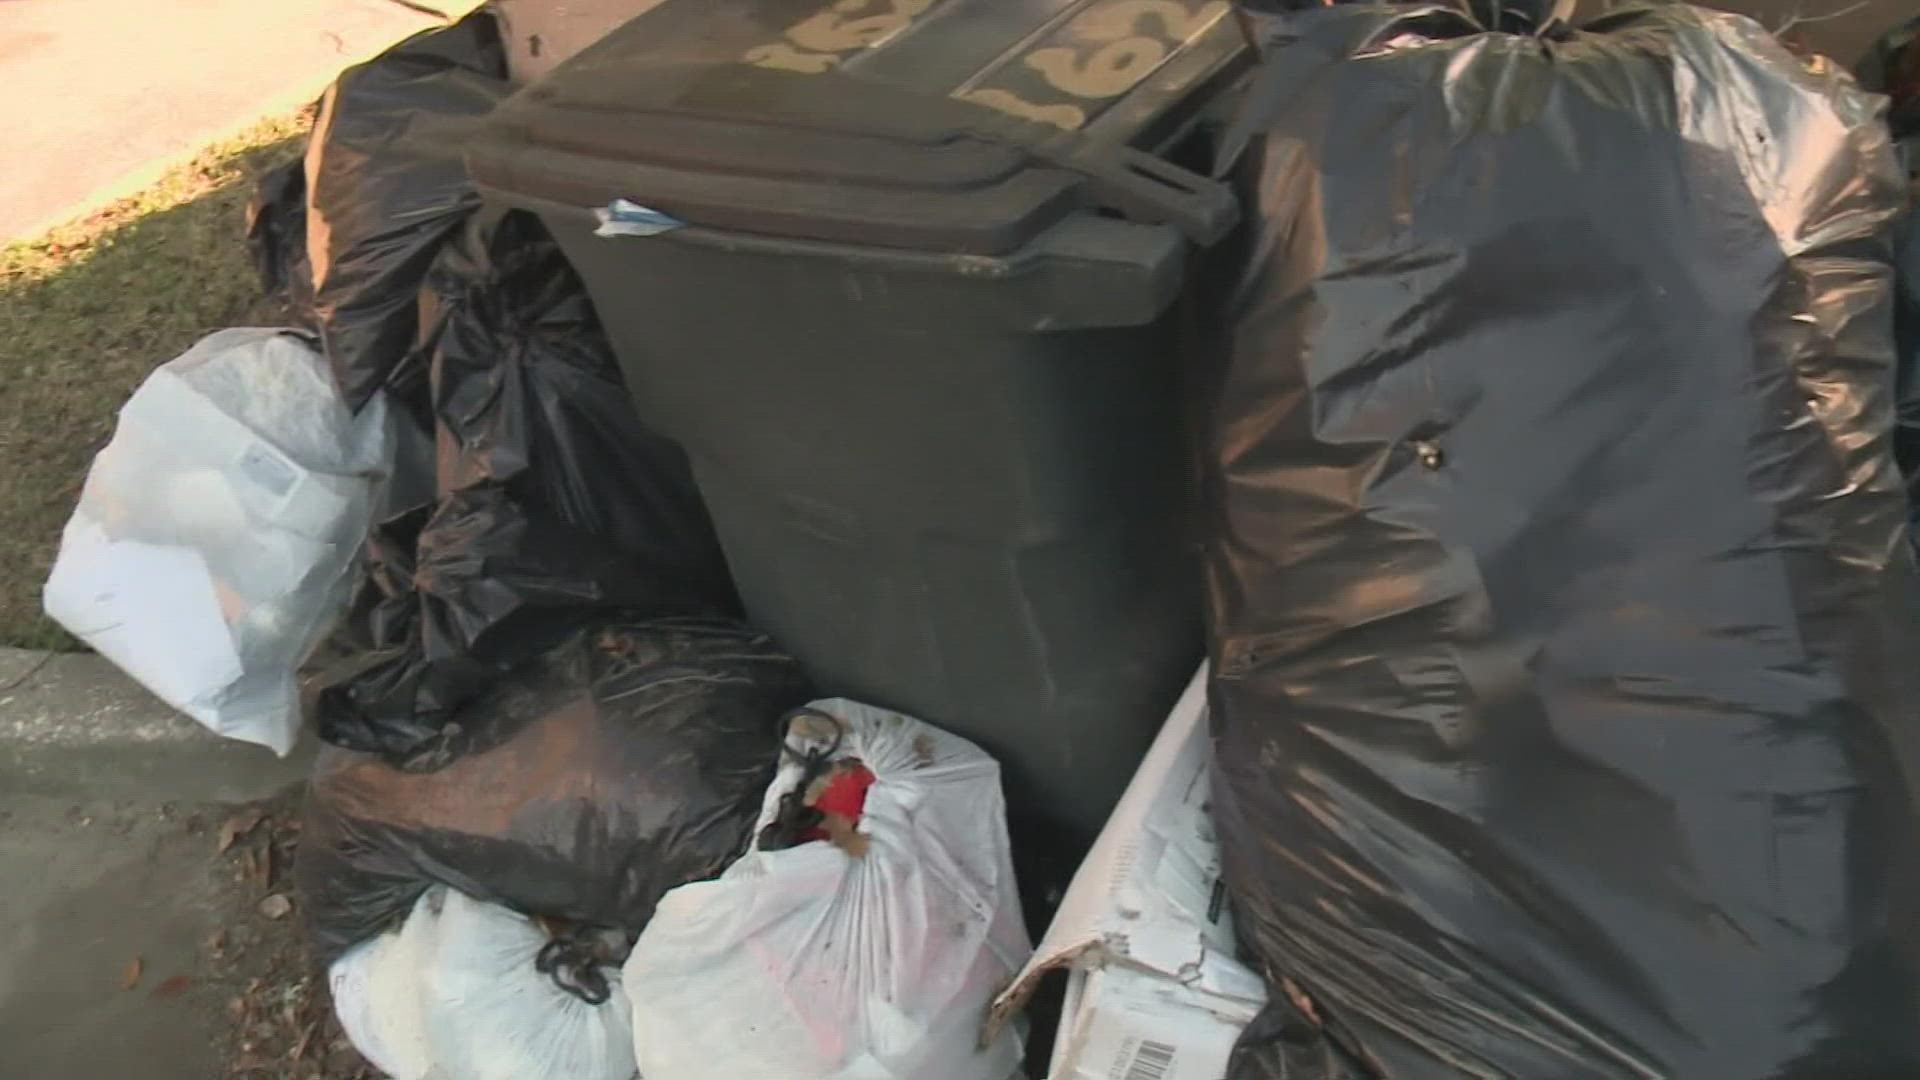 Hefty bag maker settles class-action suit regarding recycling bags